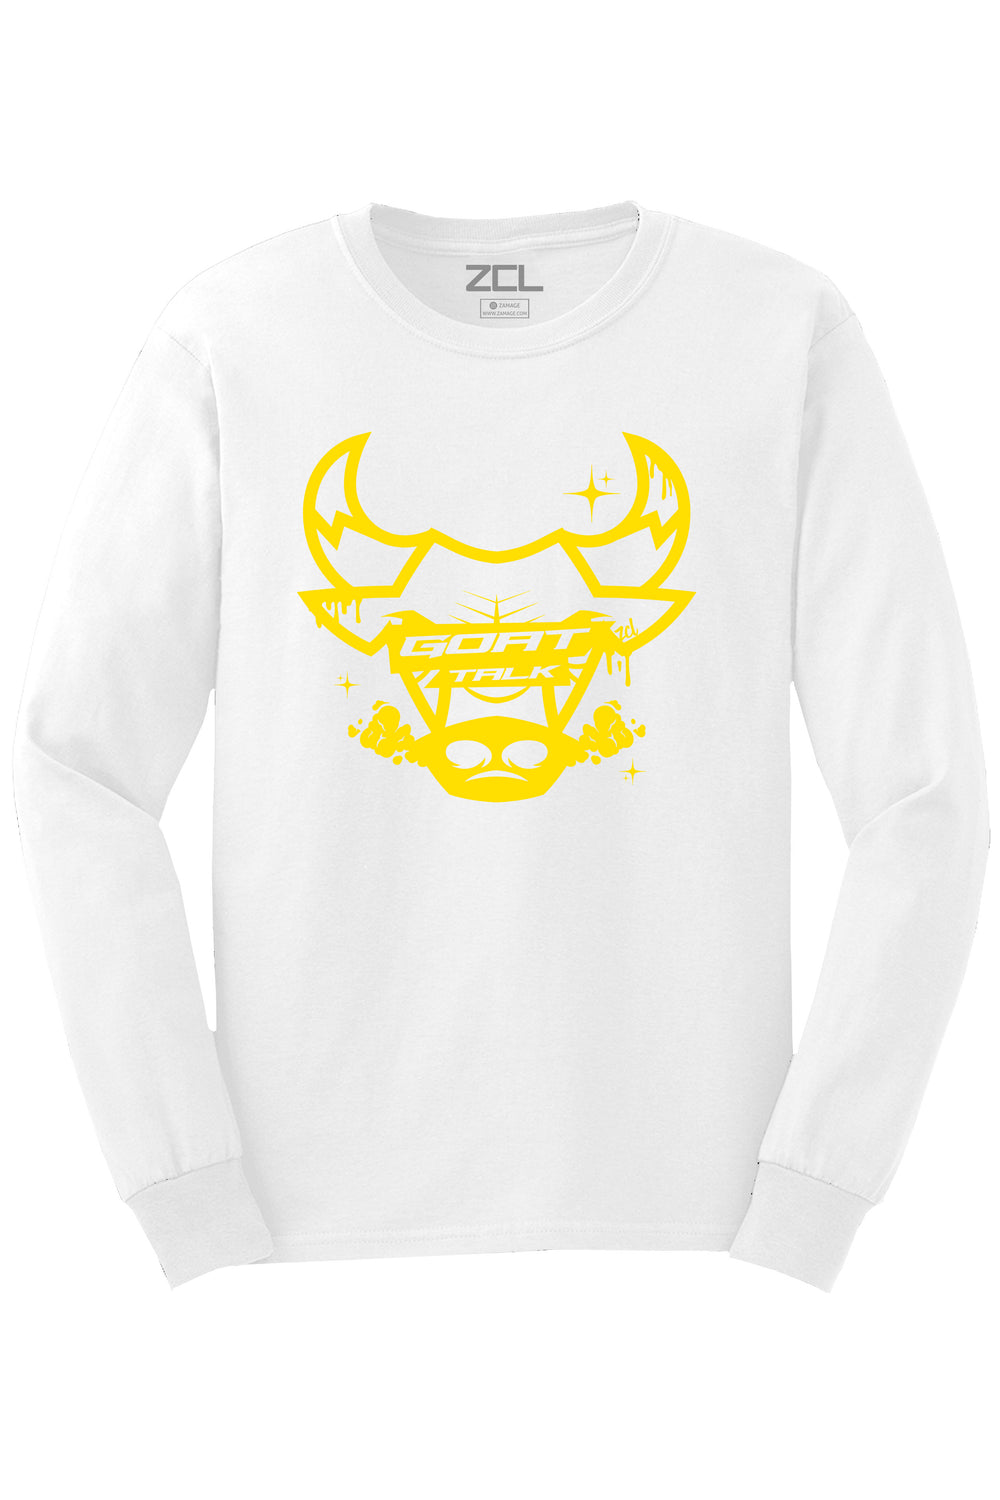 Goat Talk Long Sleeve Tee (Yellow Logo) - Zamage